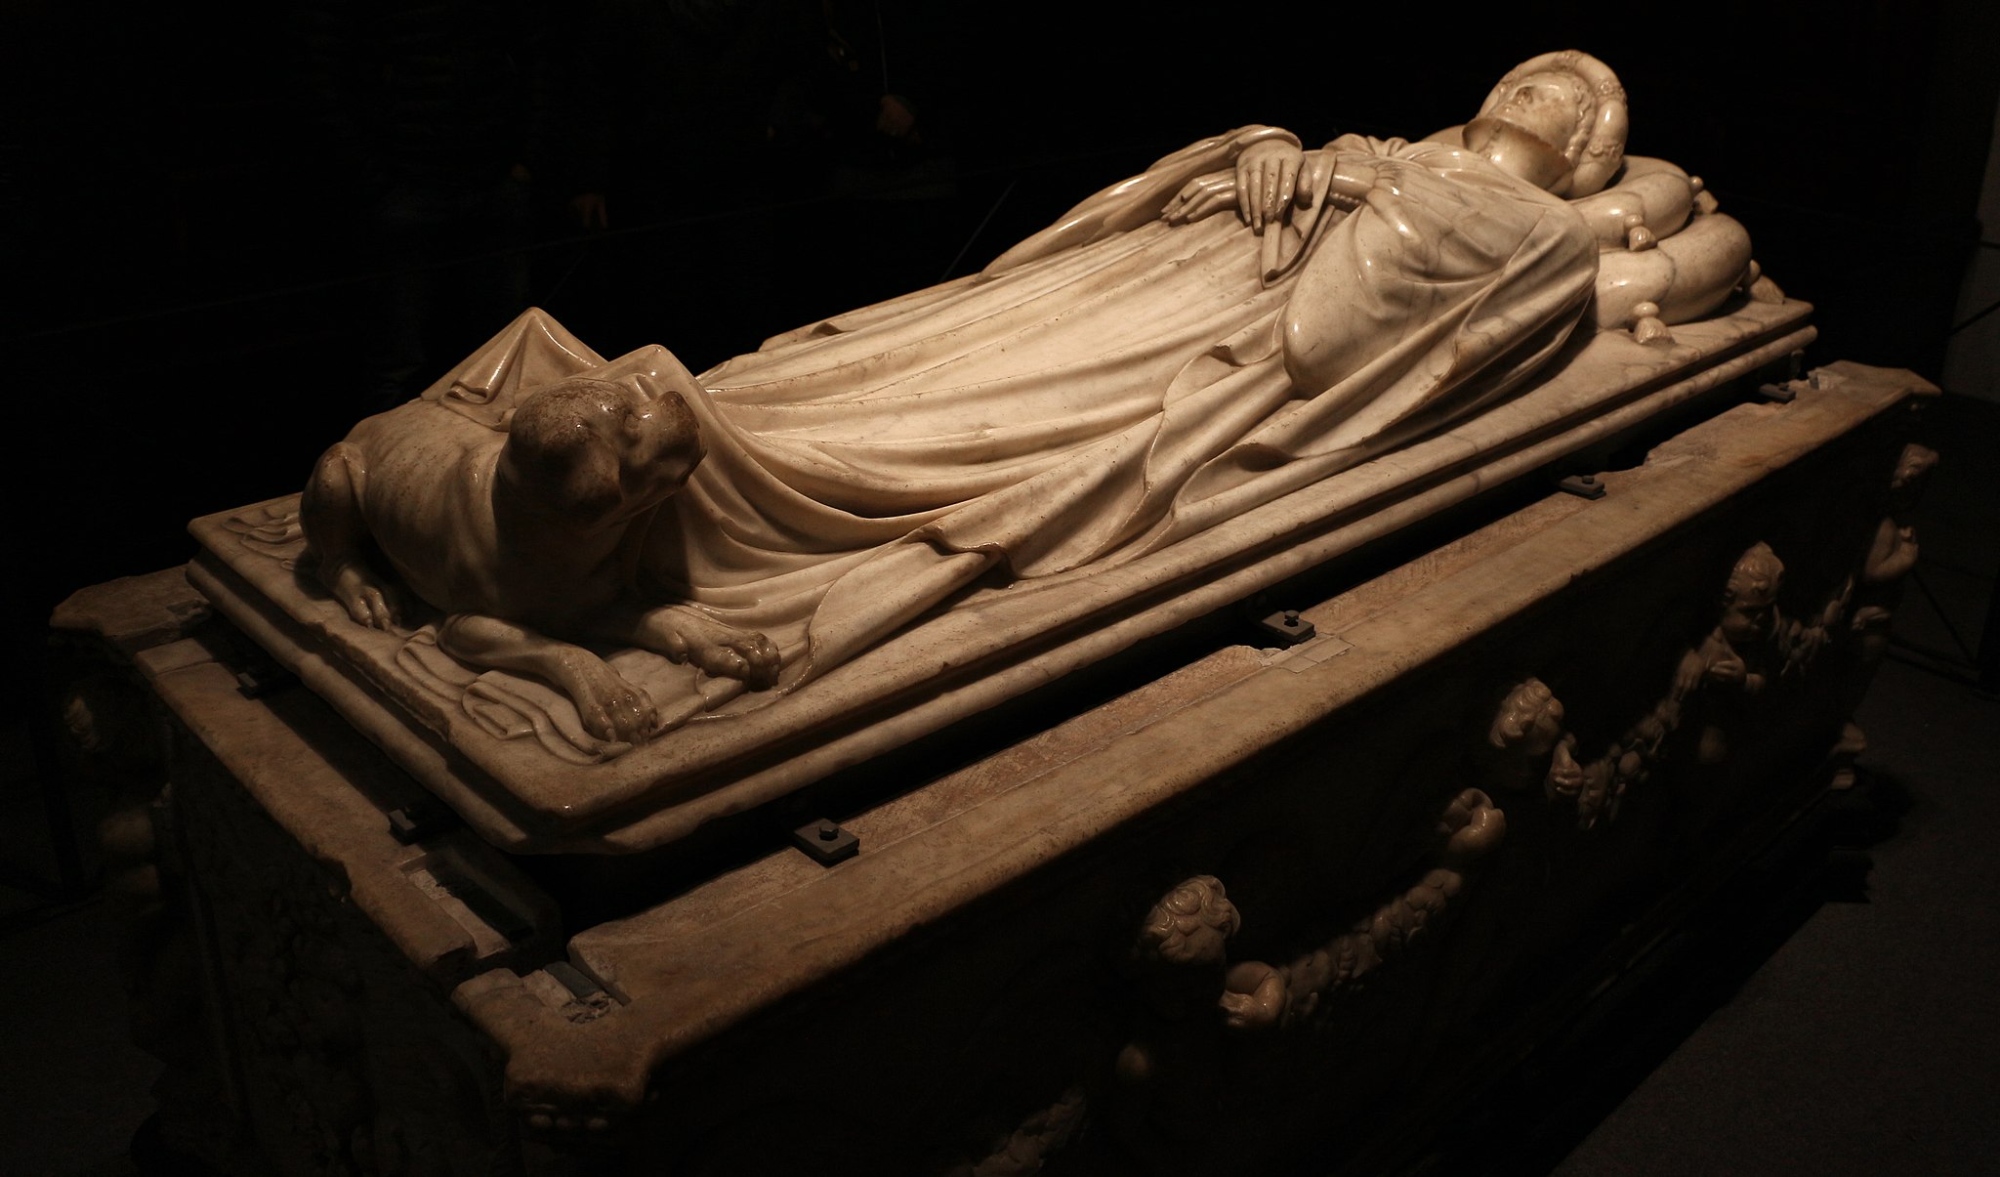 Le sarcophage en marbre d'Ilaria del Carretto, de Jacopo della Quercia